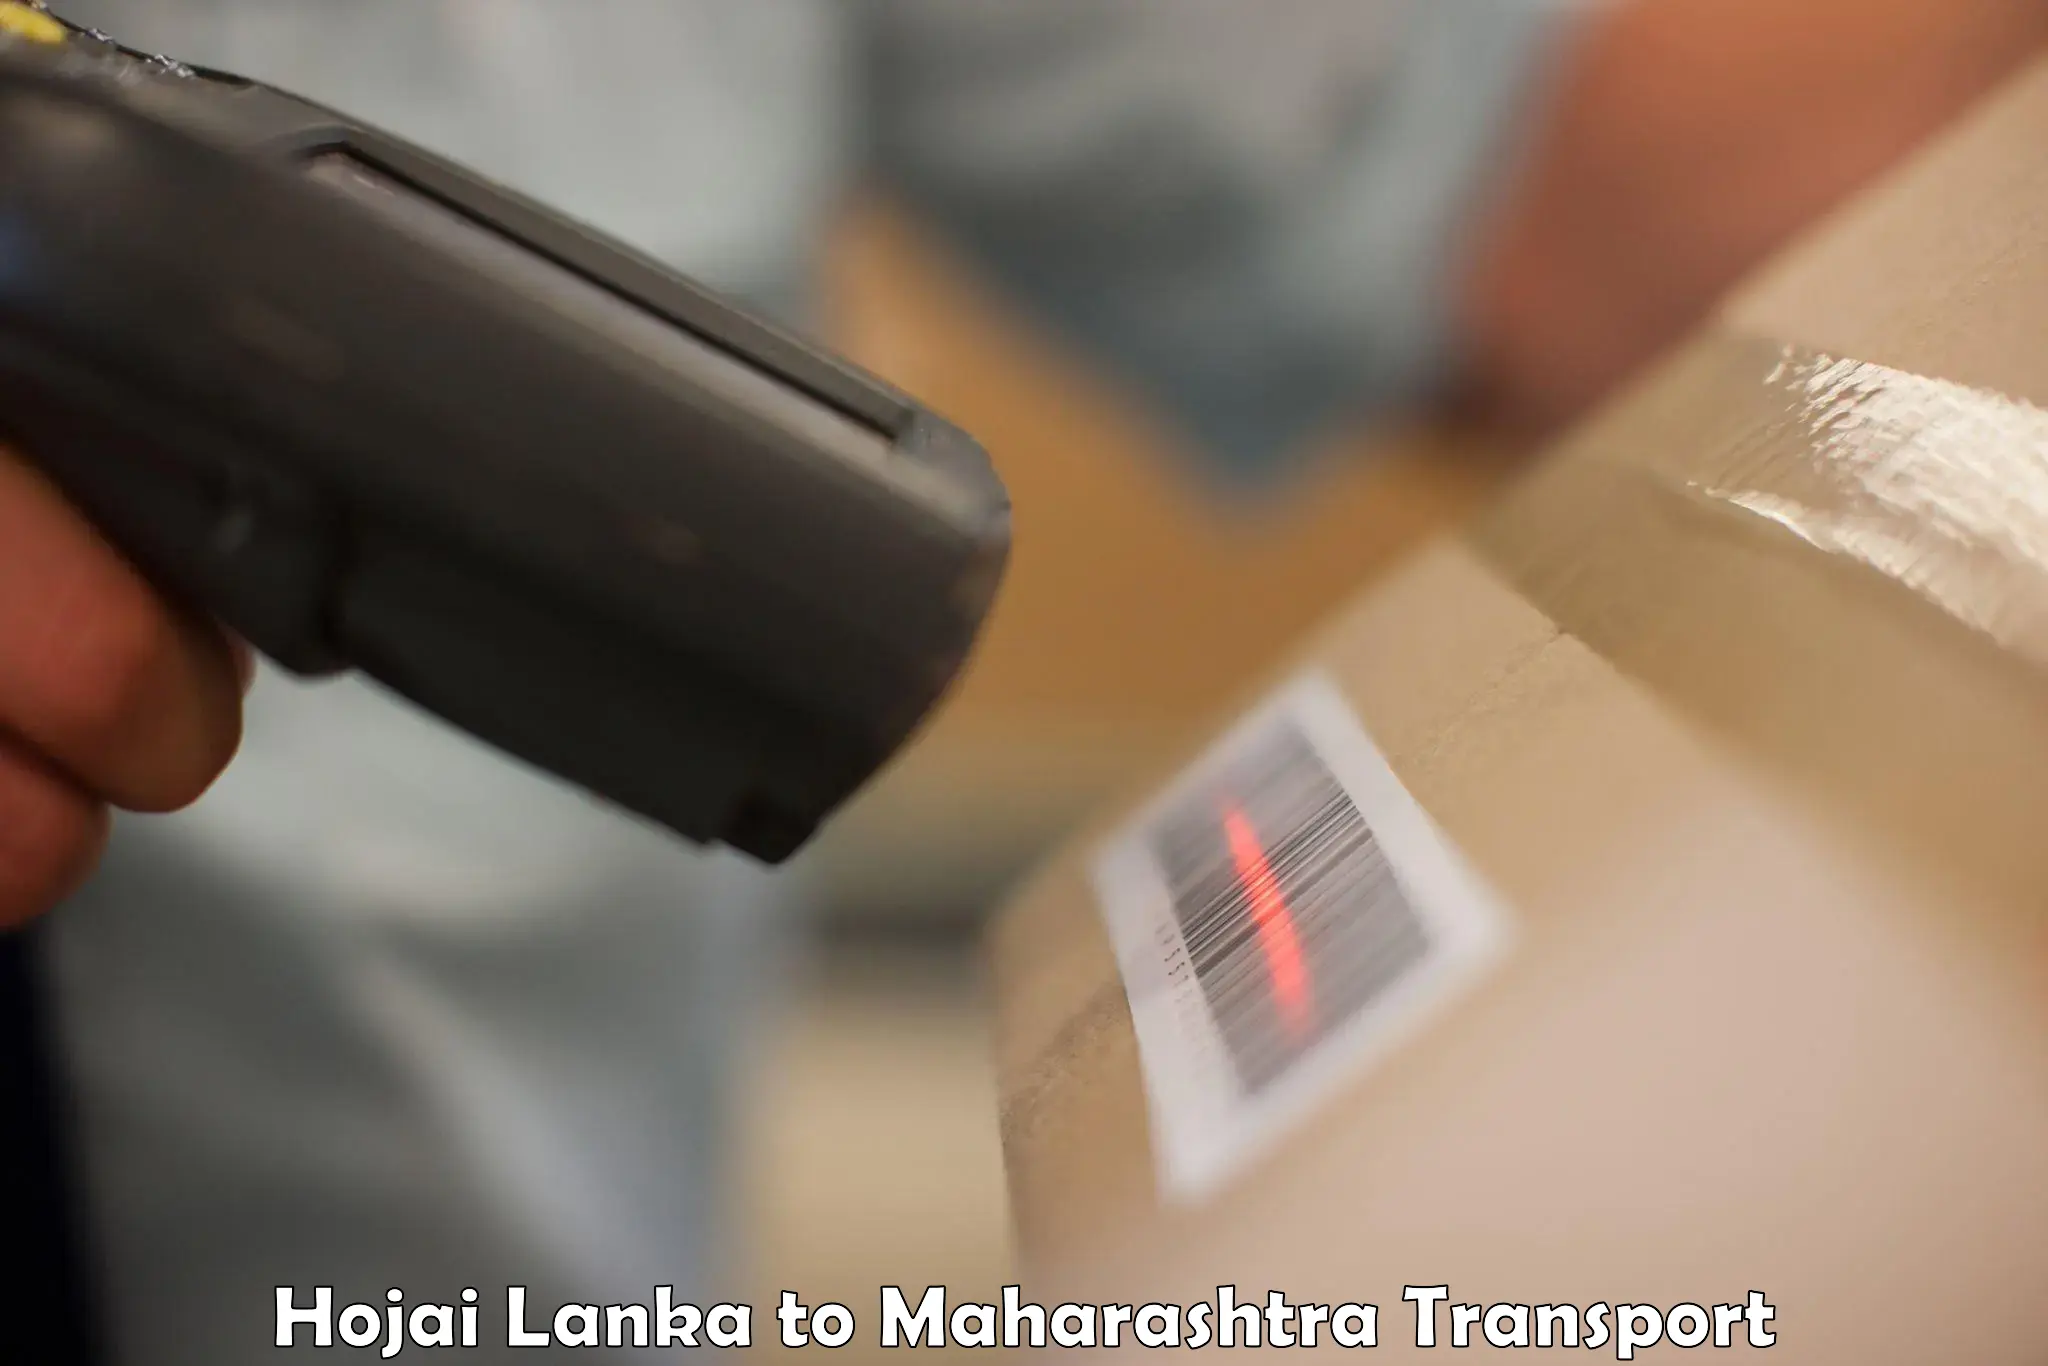 Daily parcel service transport Hojai Lanka to Alephata